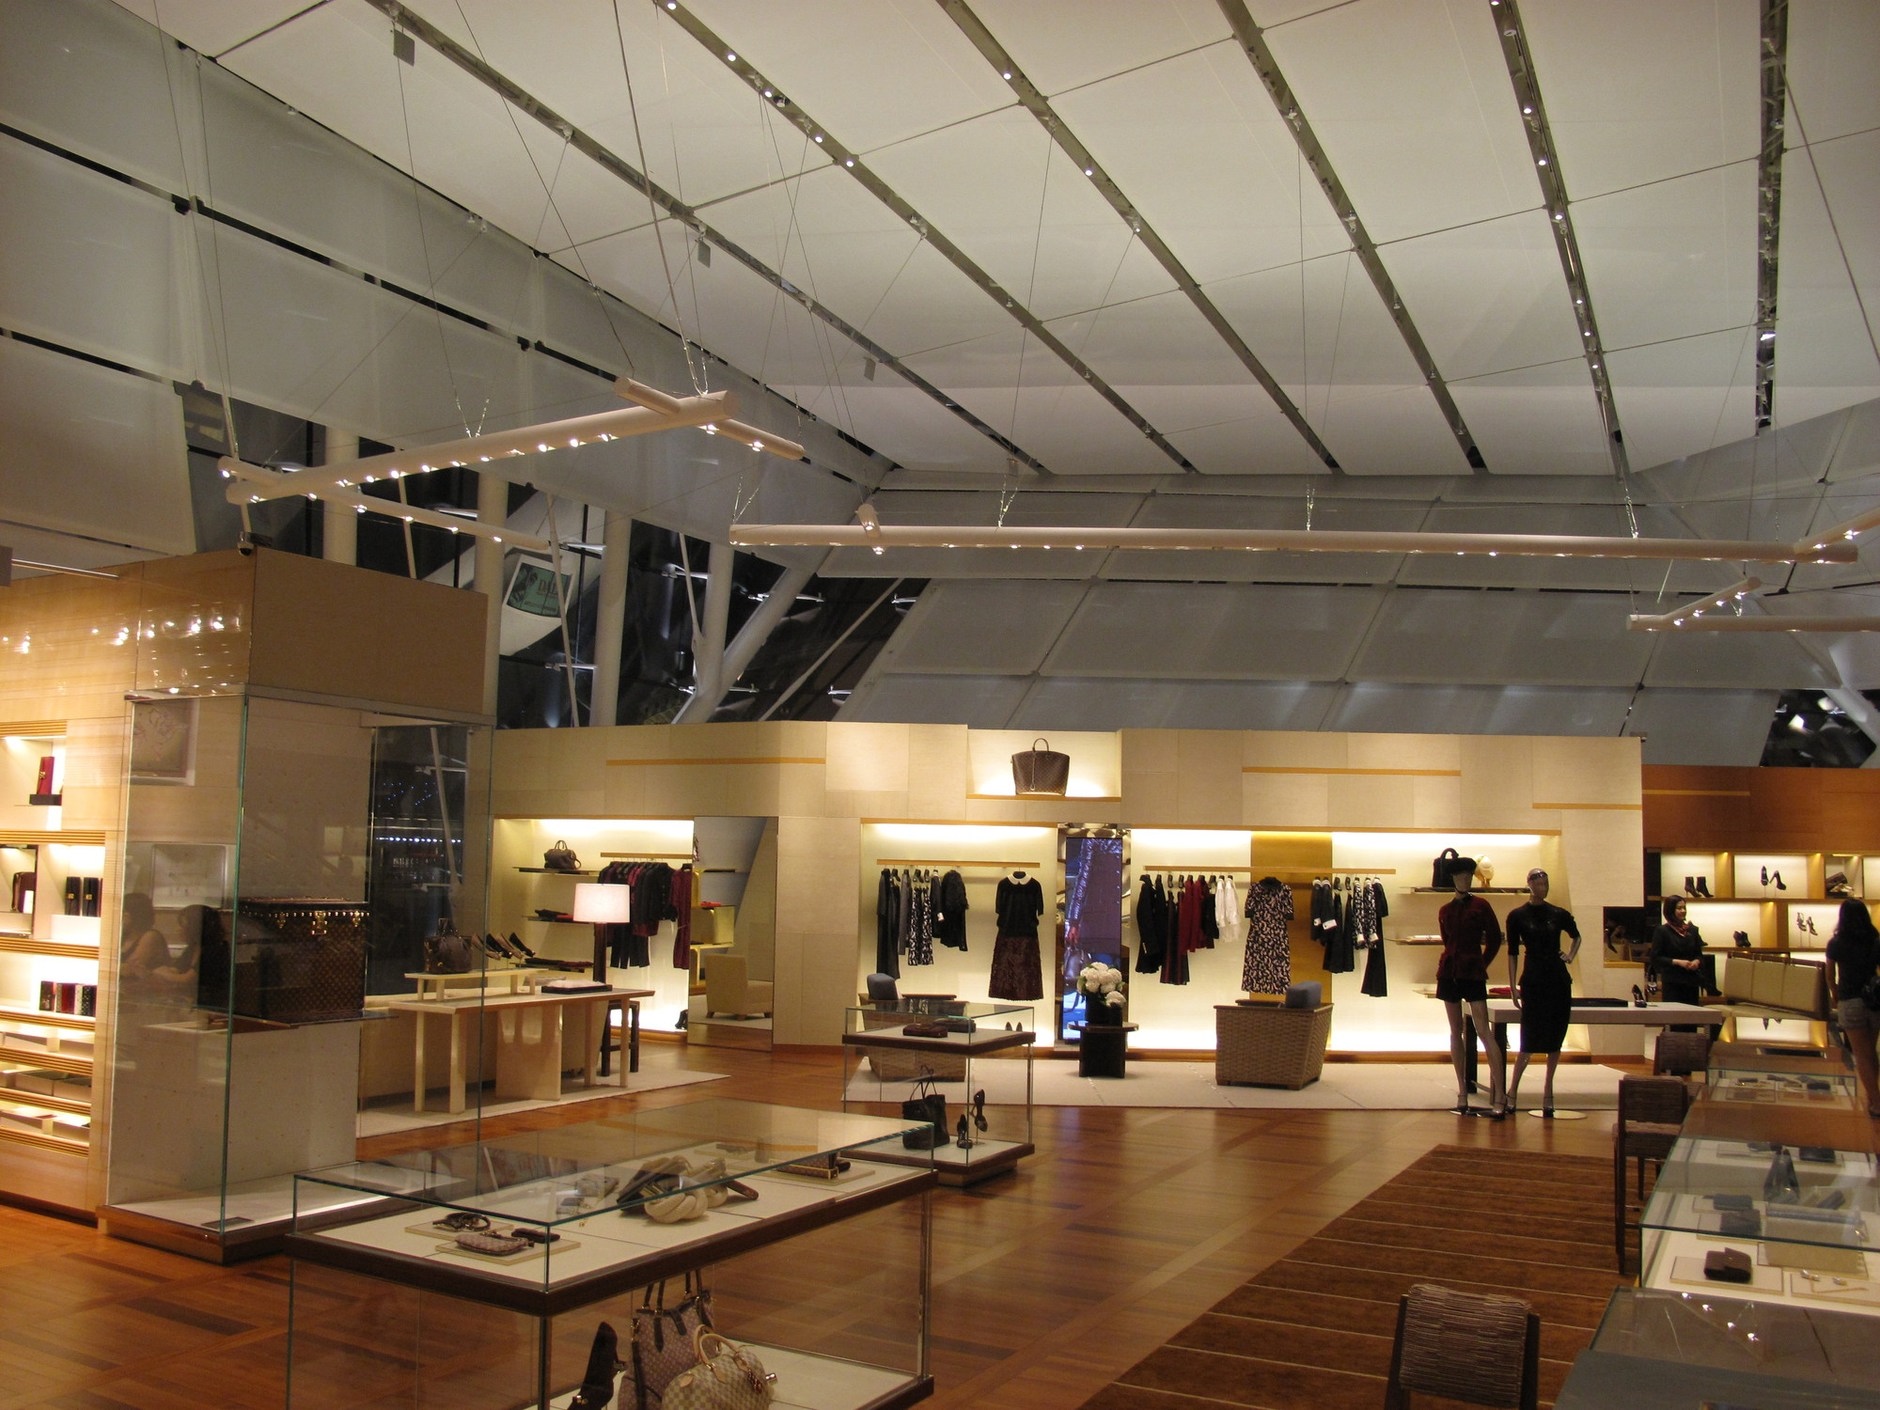 Louis Vuitton in Singapore by FTL Design Engineering Studio | KARMATRENDZ